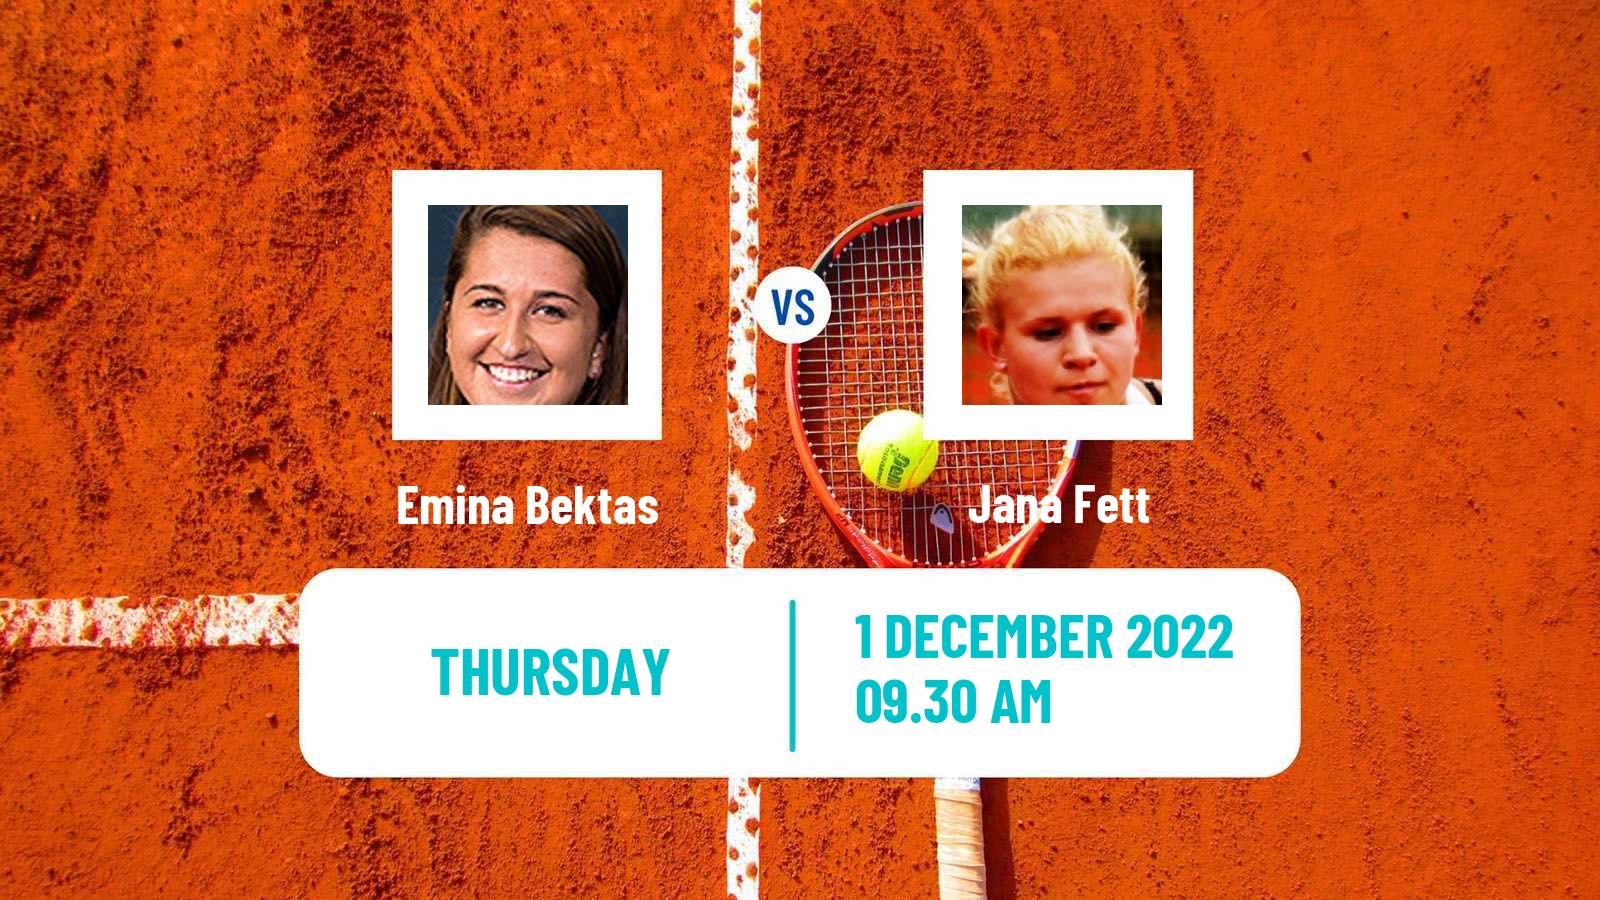 Tennis ITF Tournaments Emina Bektas - Jana Fett